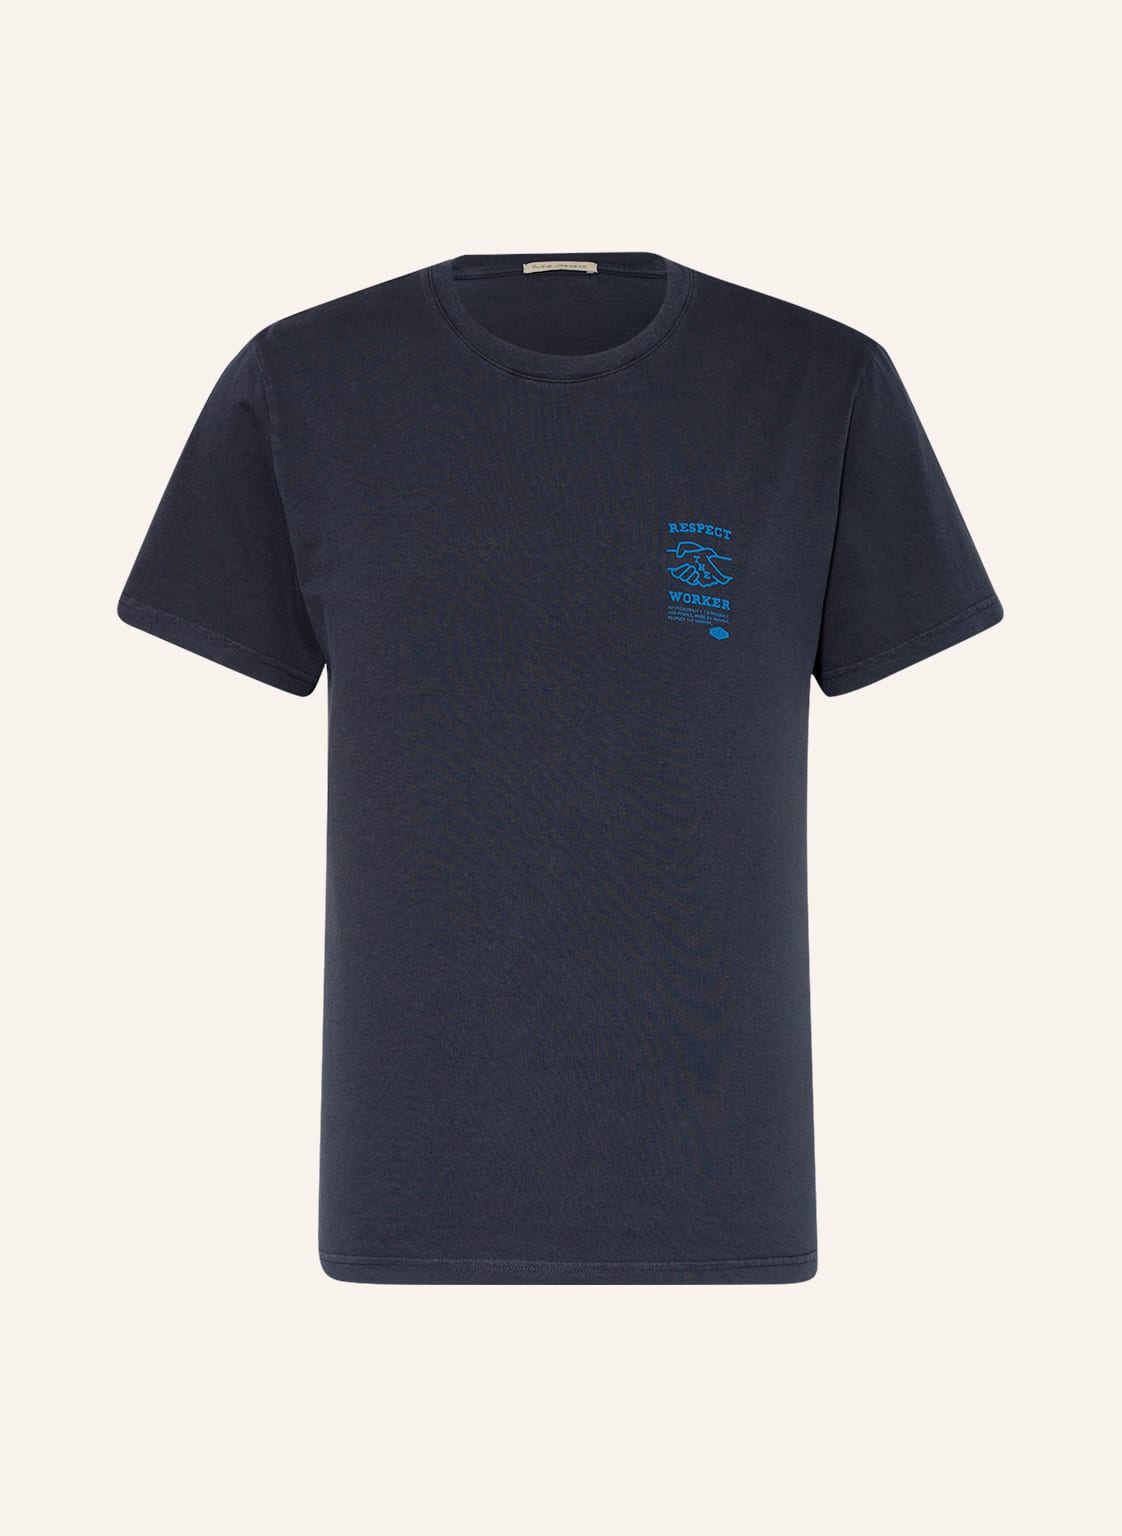 Nudie Jeans T-Shirt Roy Respect blau